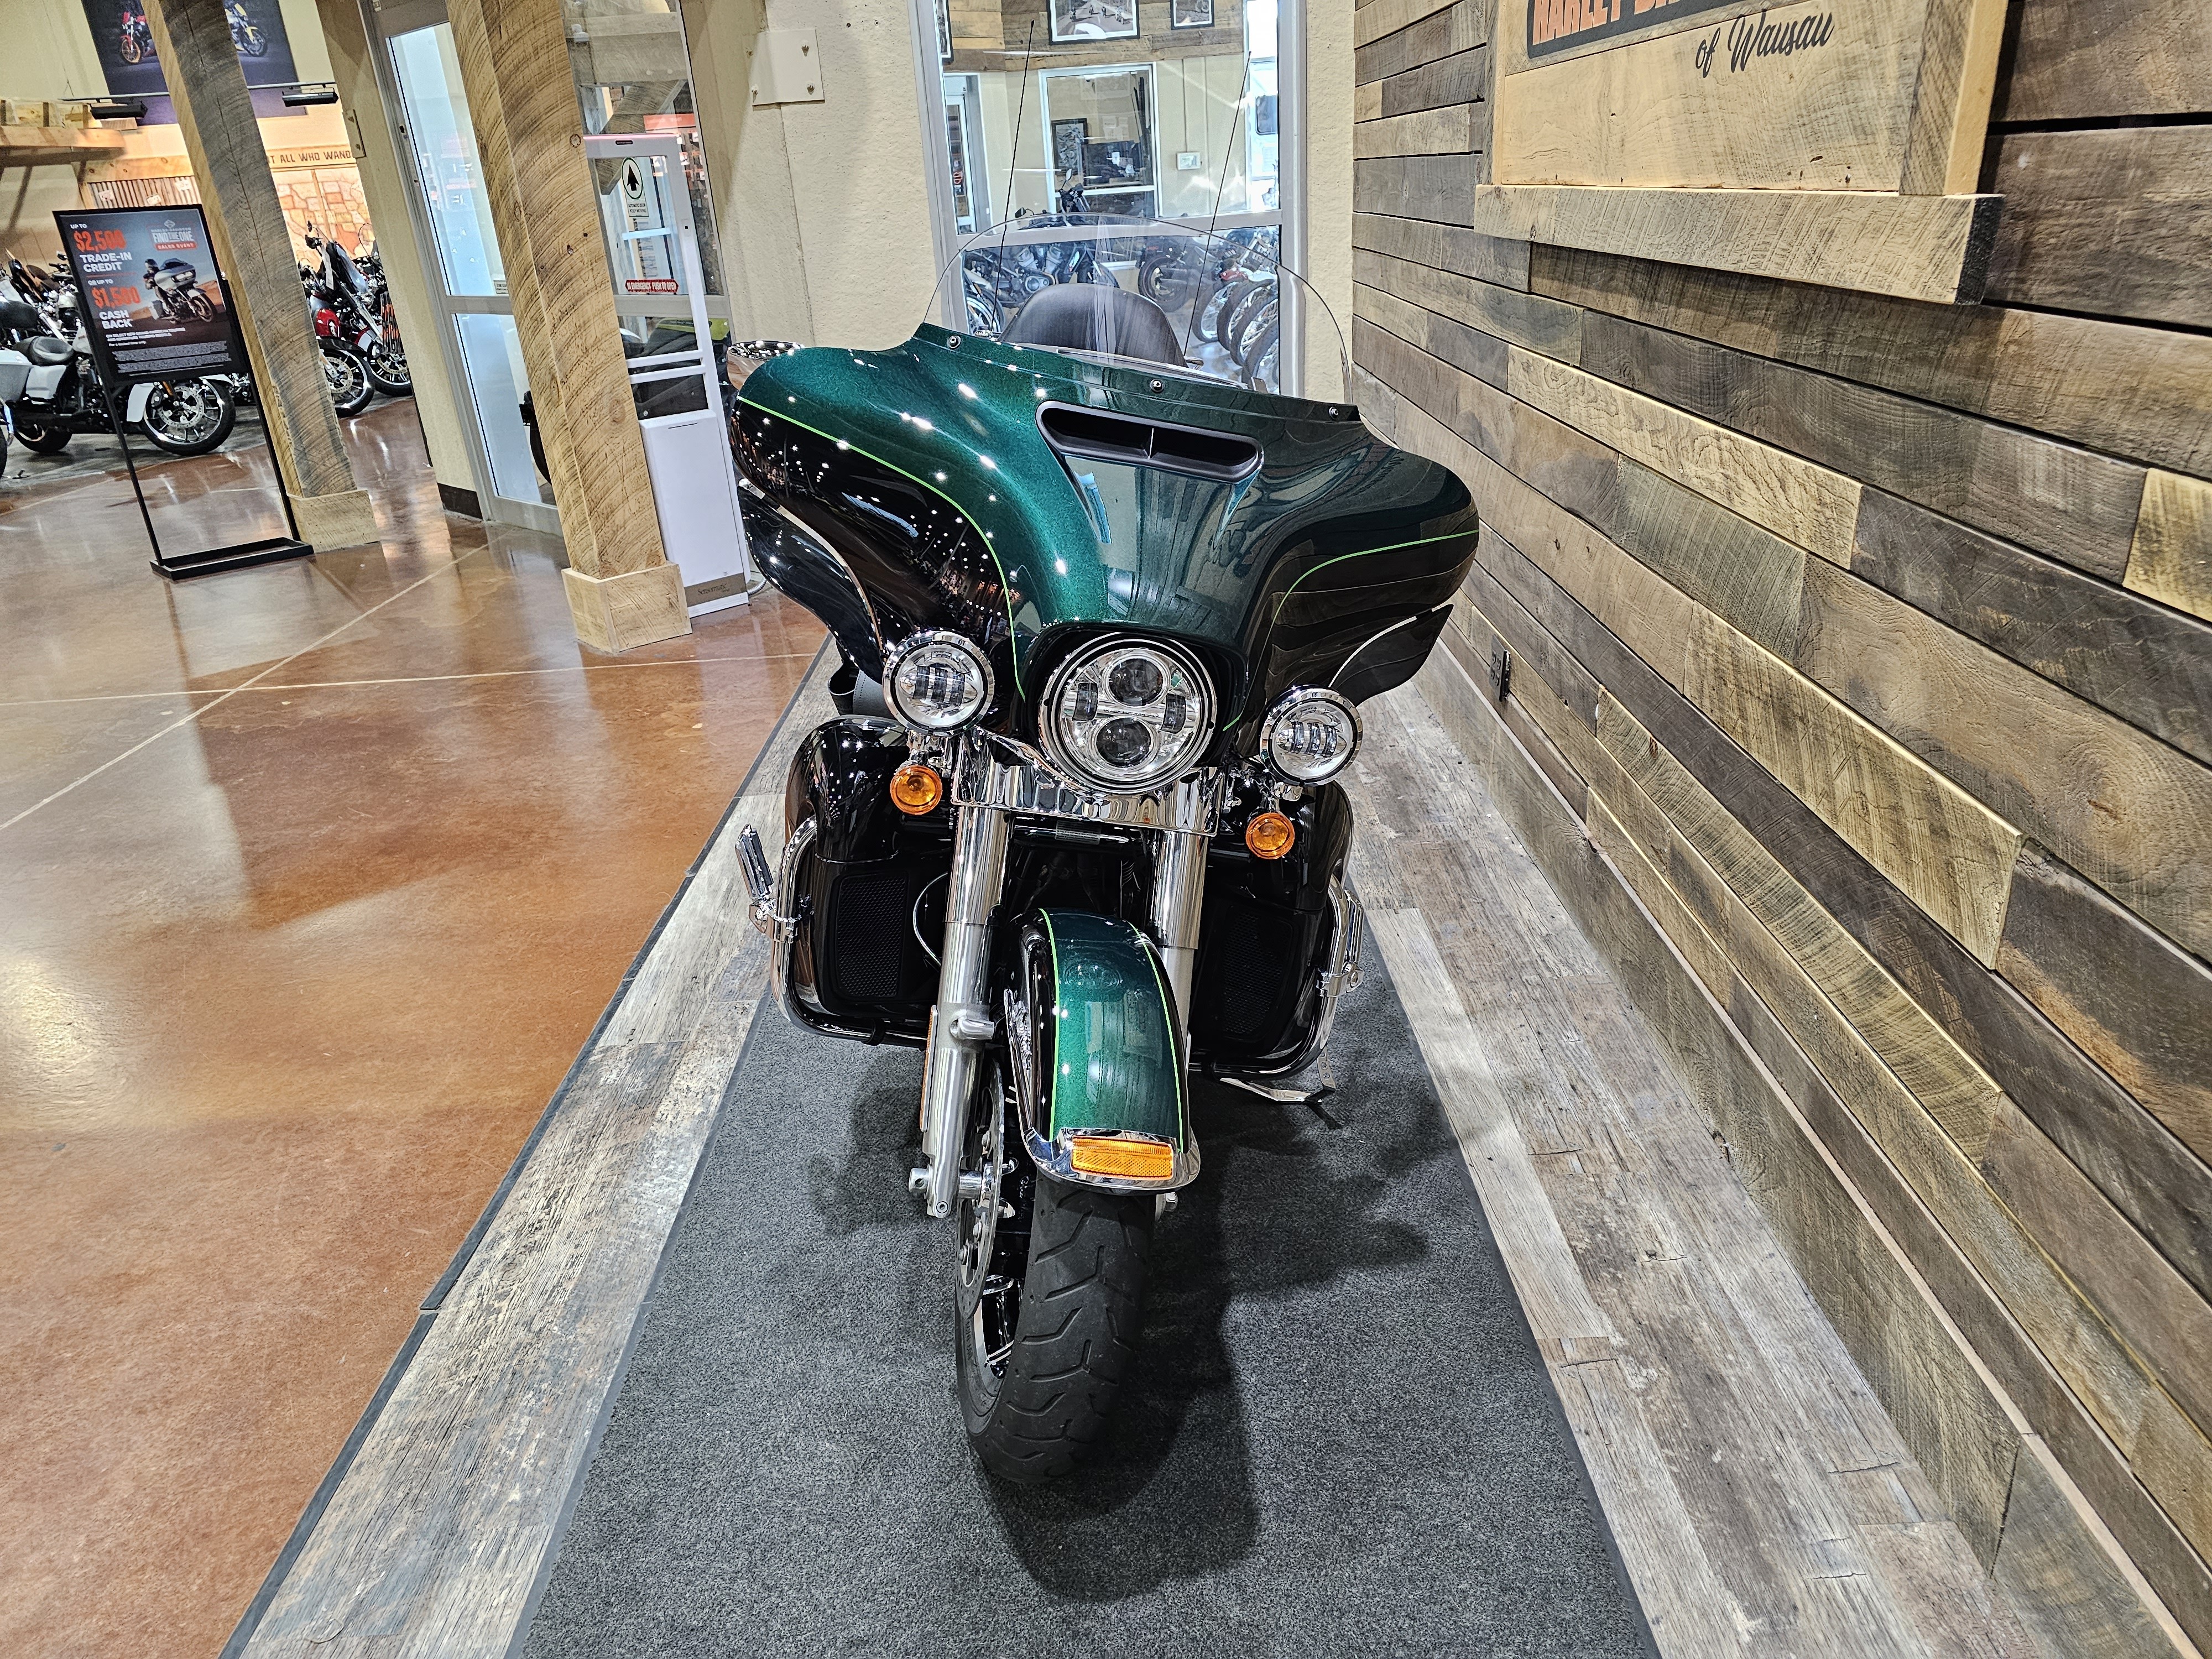 2015 Harley-Davidson Electra Glide Ultra Limited Low at Bull Falls Harley-Davidson